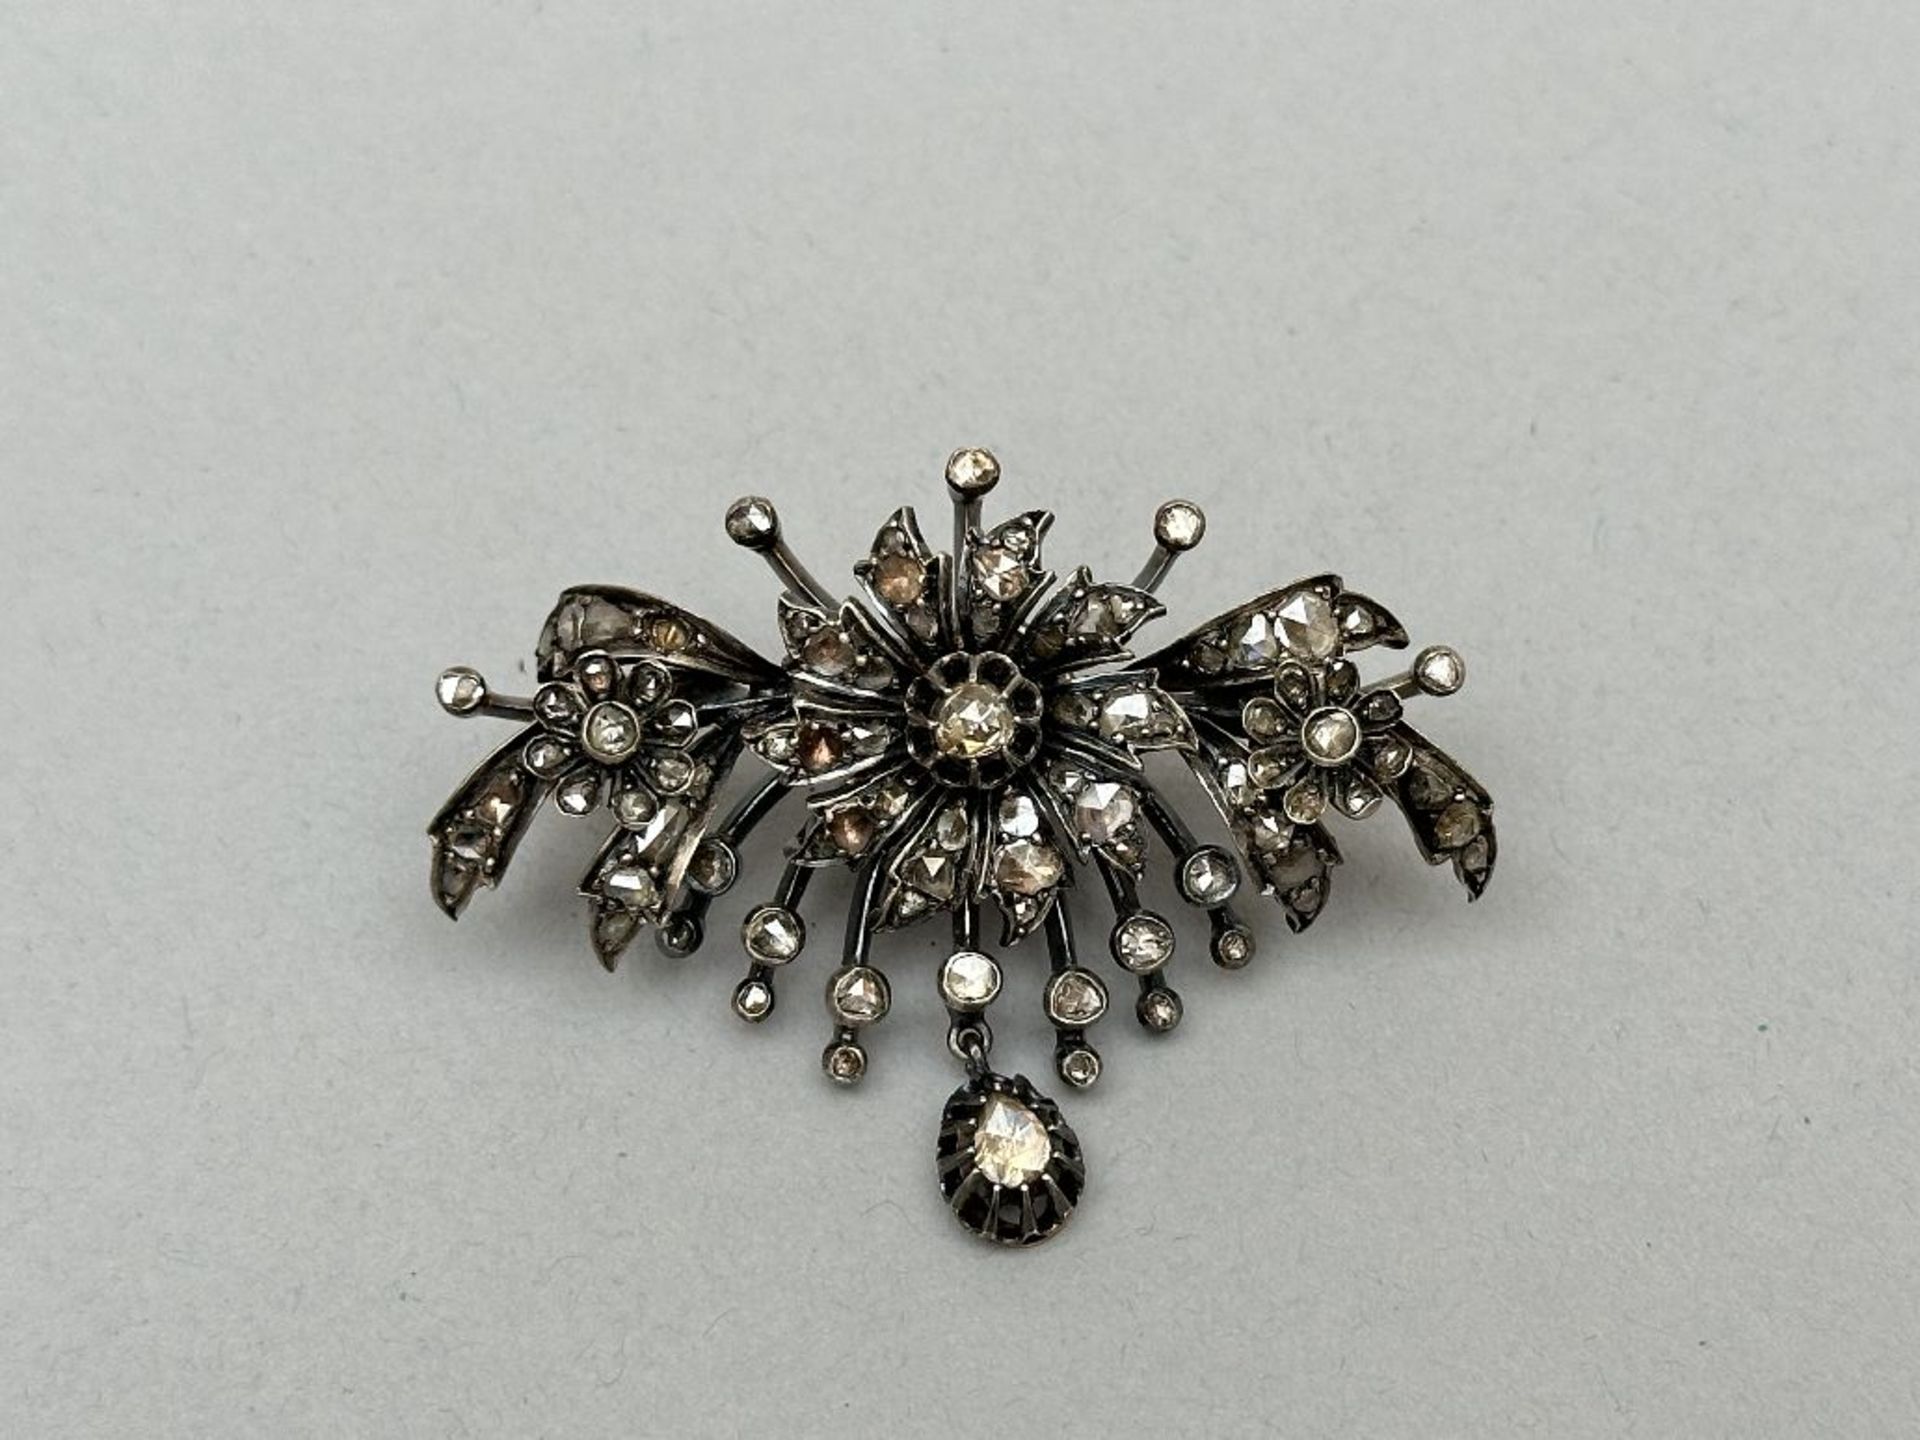 Flemish jewelry: flower brooch and pendant - Bild 2 aus 5